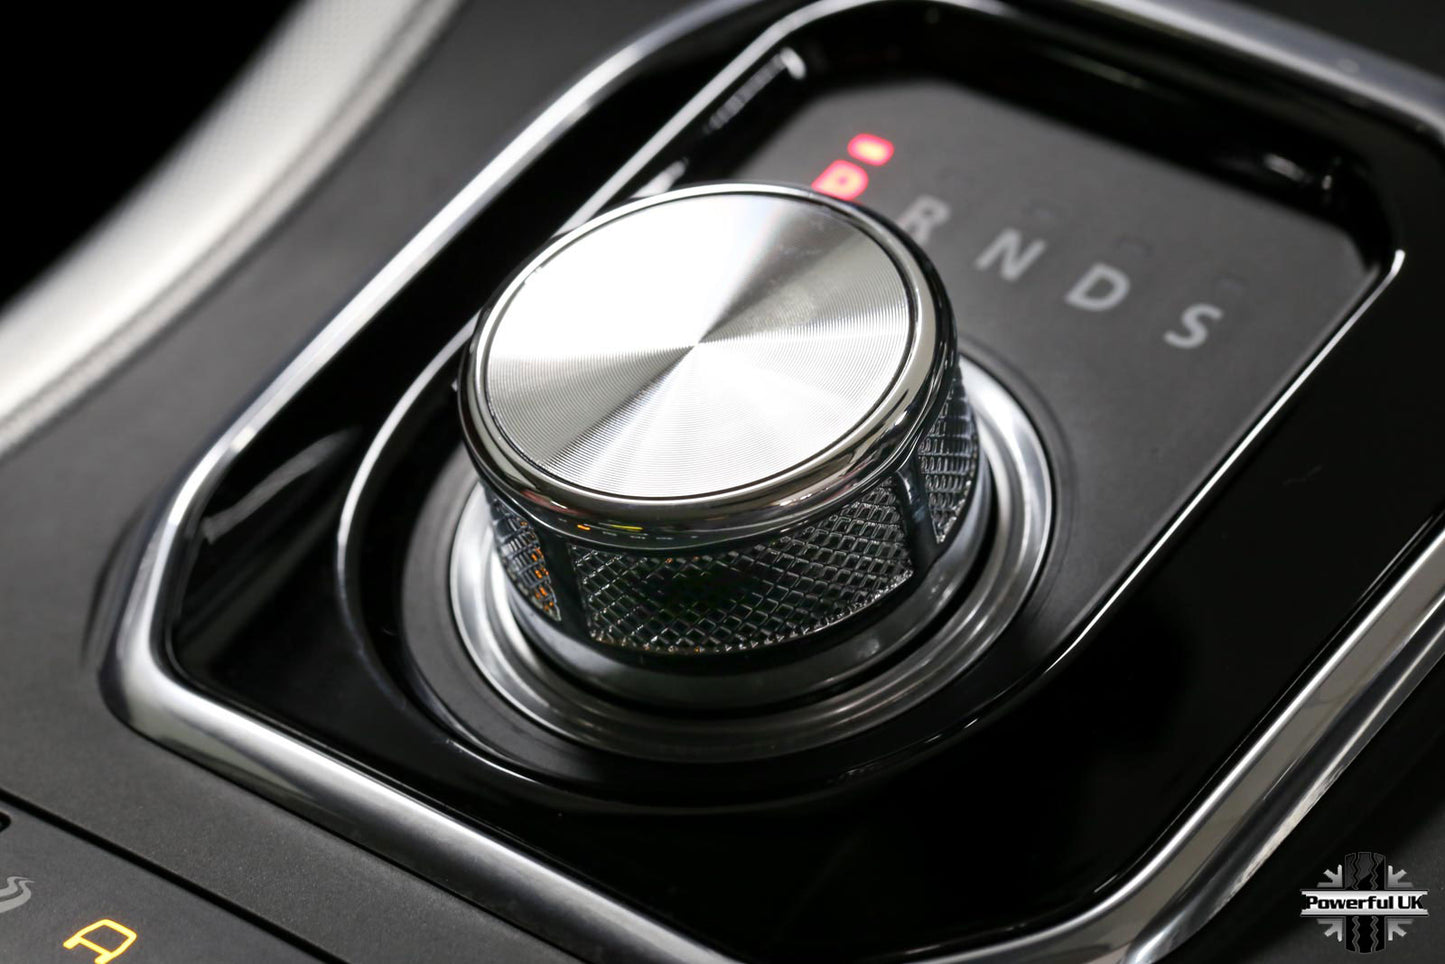 Gear Selector - Chrome (Multi Fit) for Range Rover Evoque 1 (2011-19)